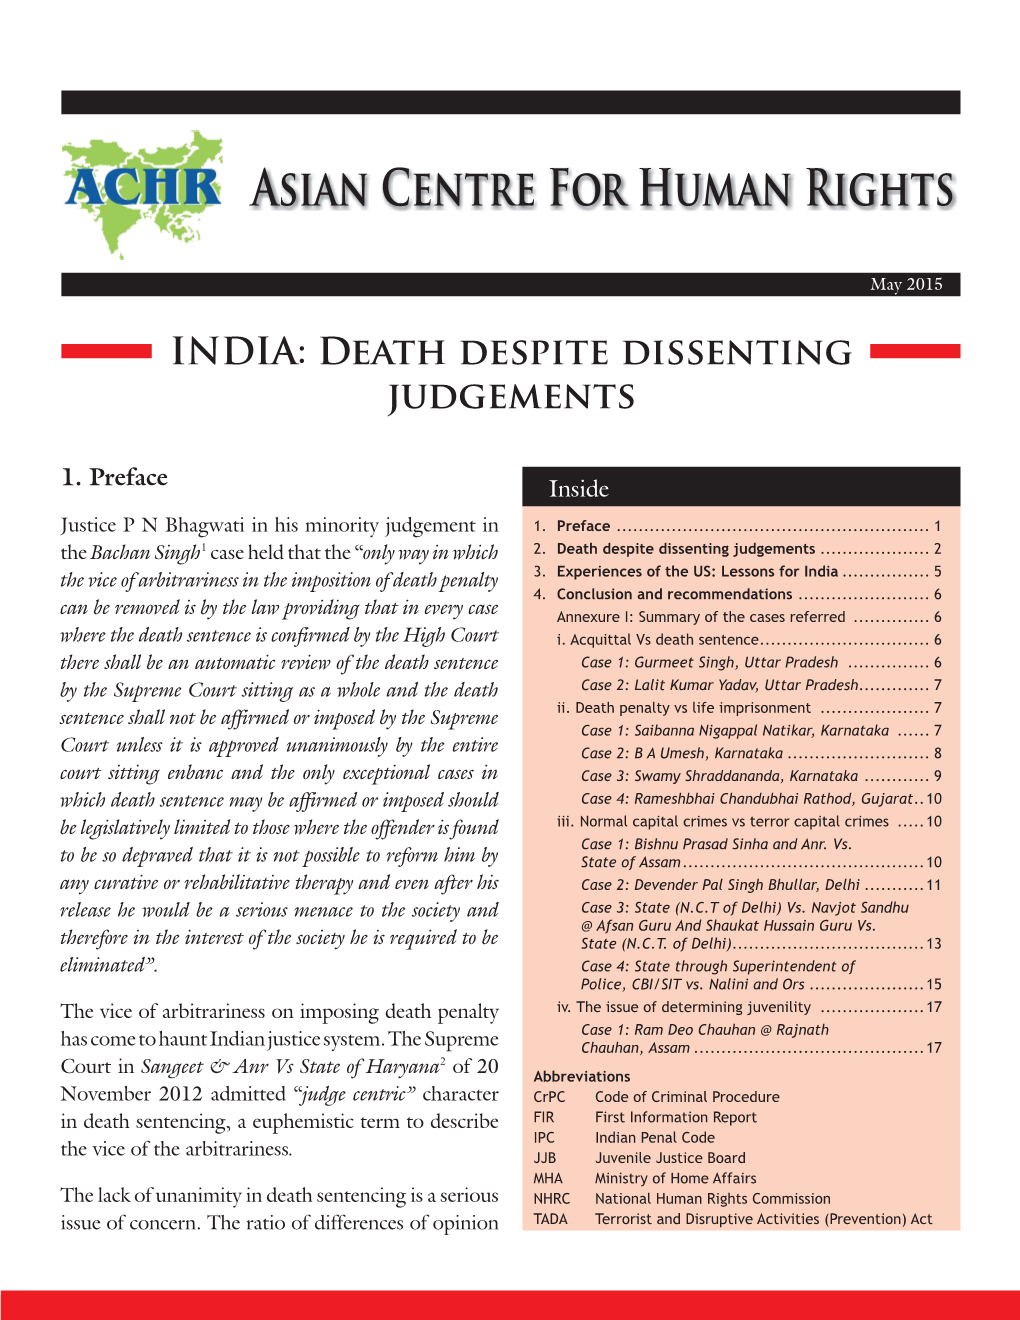 India: Death Despite Dissenting Judgements